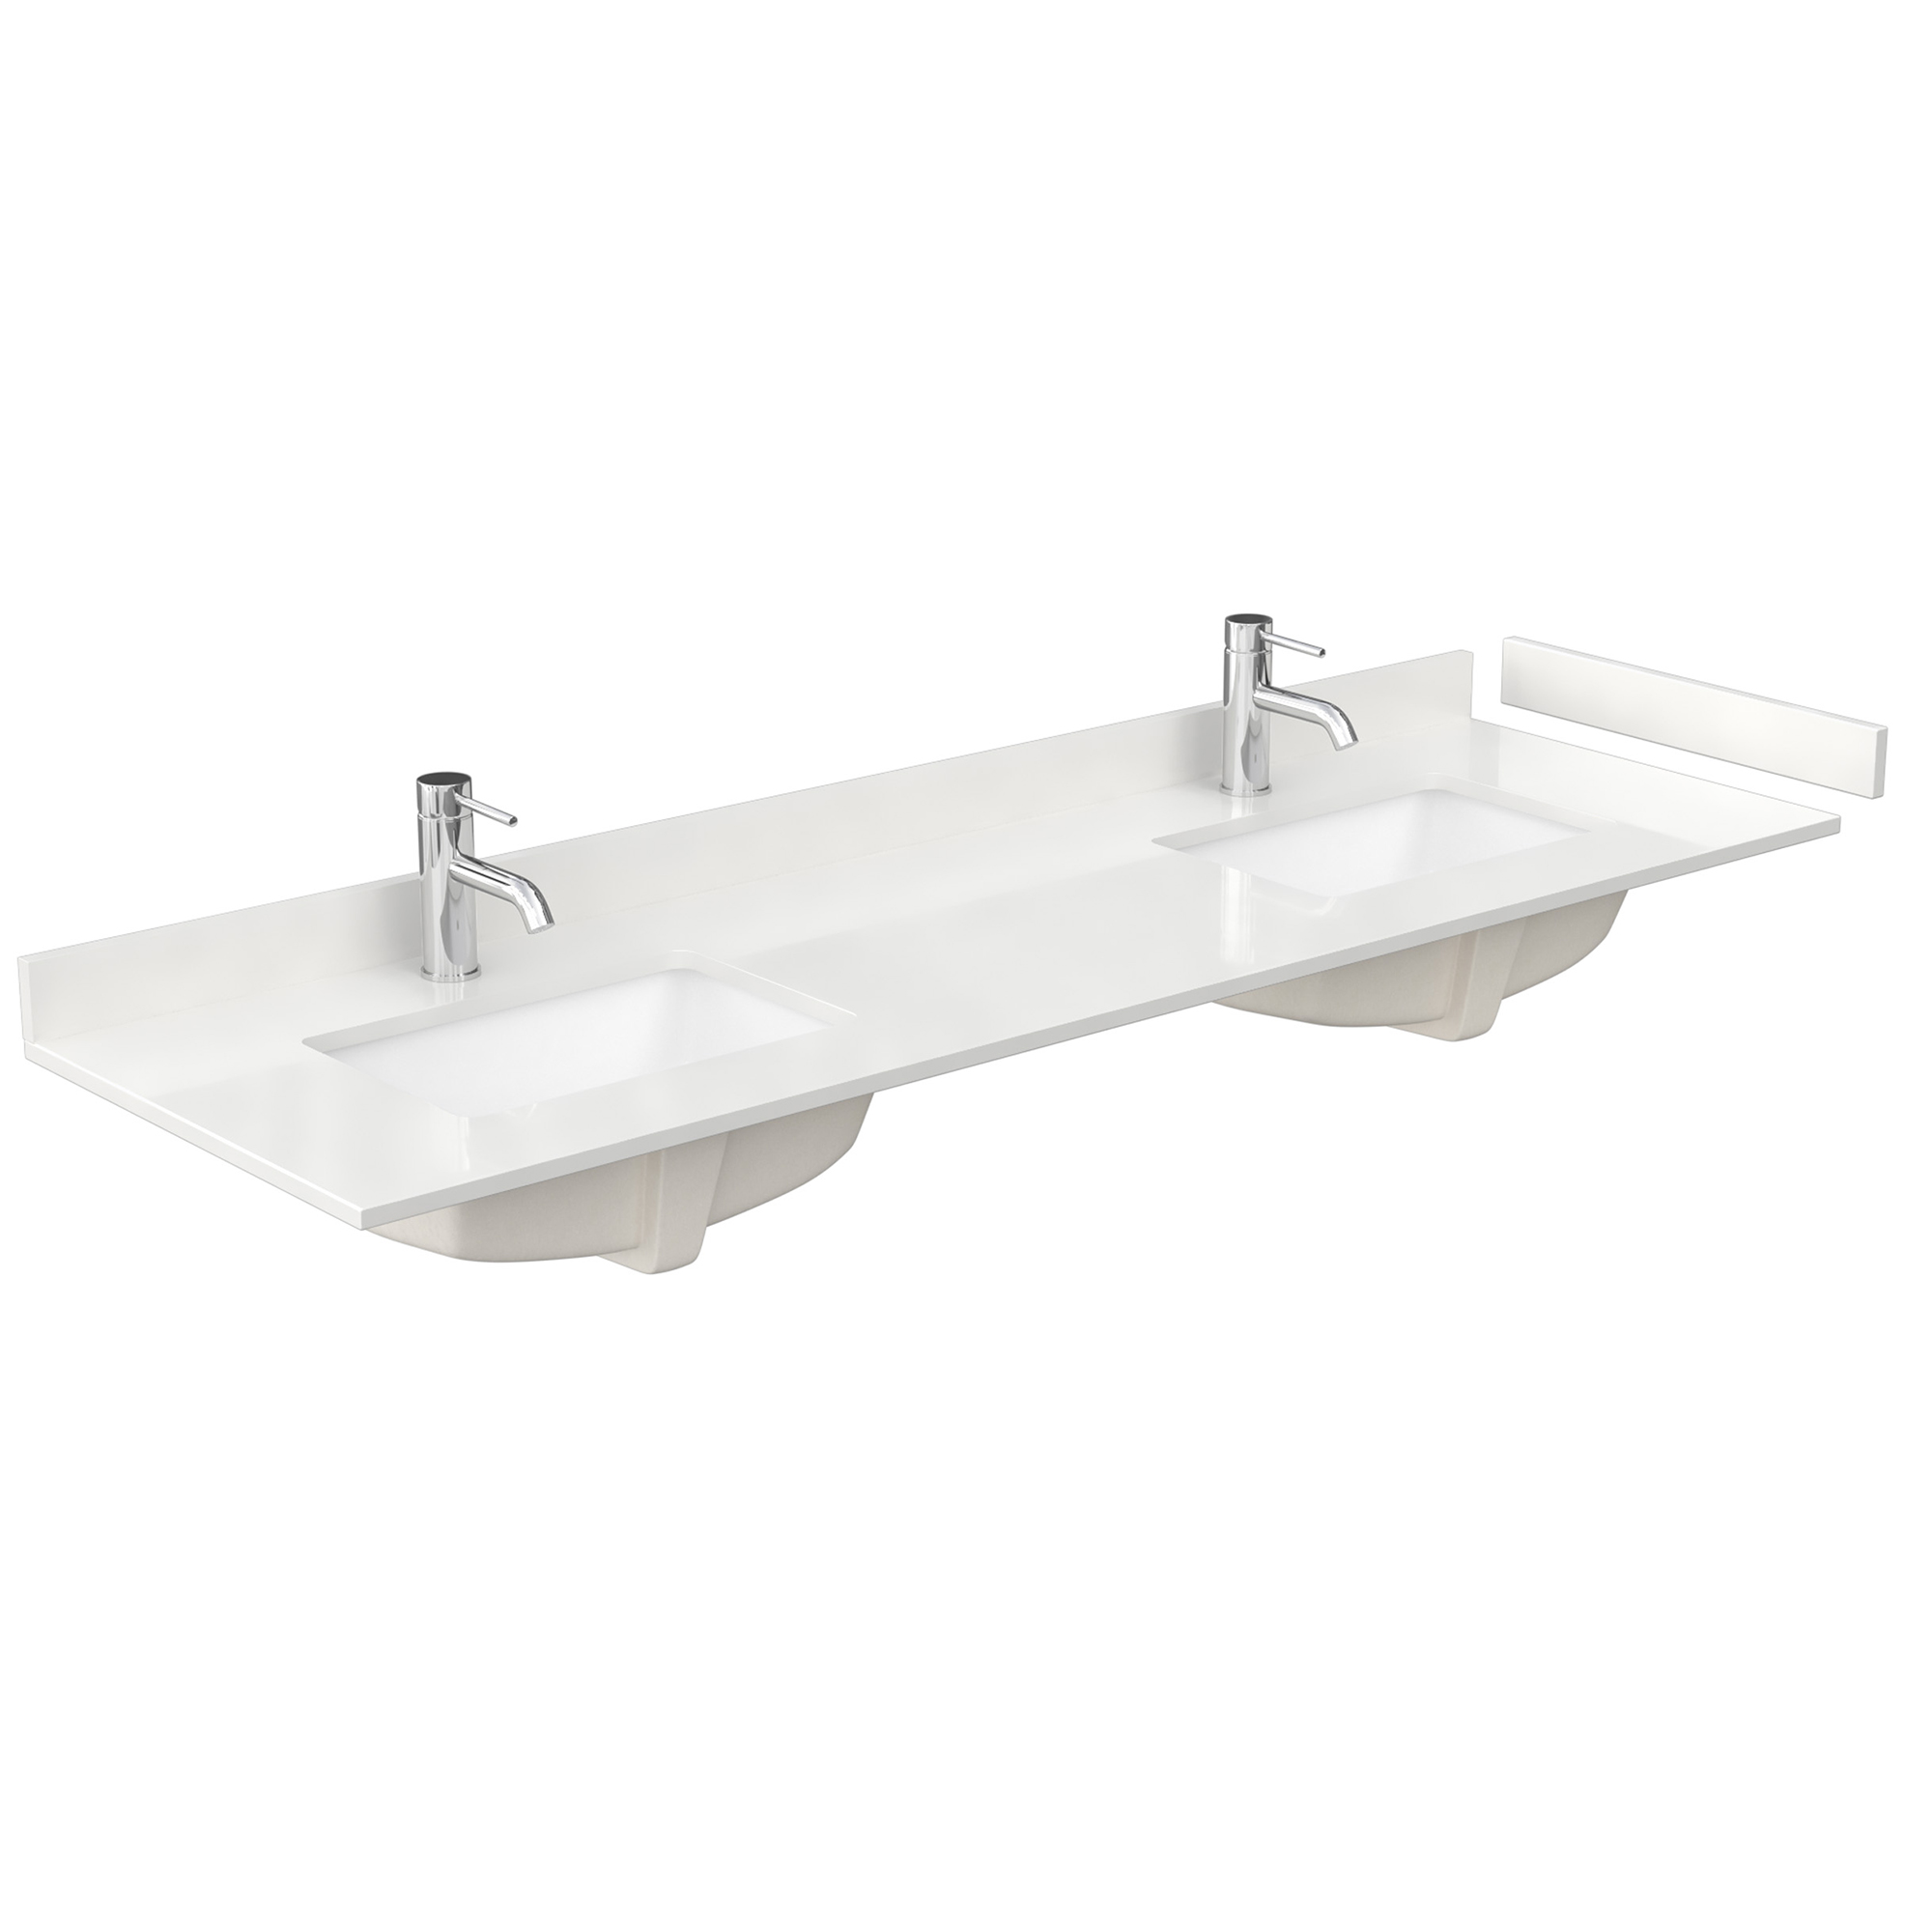 72" Double Countertop - White Quartz (1000) with Undermount Square Sinks (1-Hole) - Includes Backsplash and Sidesplash WCFQC172DTOPUNSWQ